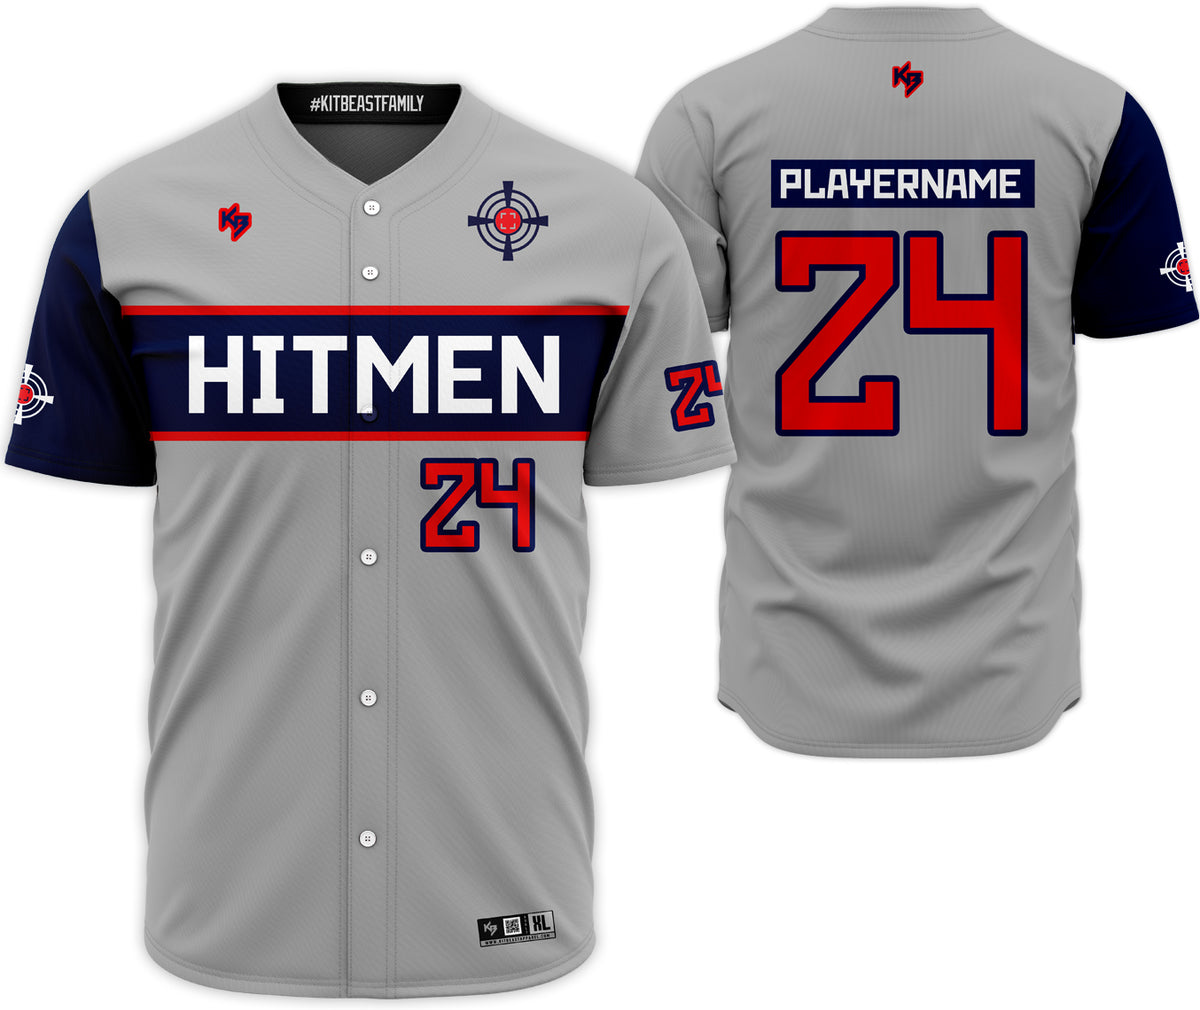 CUSTOM T-Shirt JERSEY Personalized Name Number Team - Hitmen White -  Softball